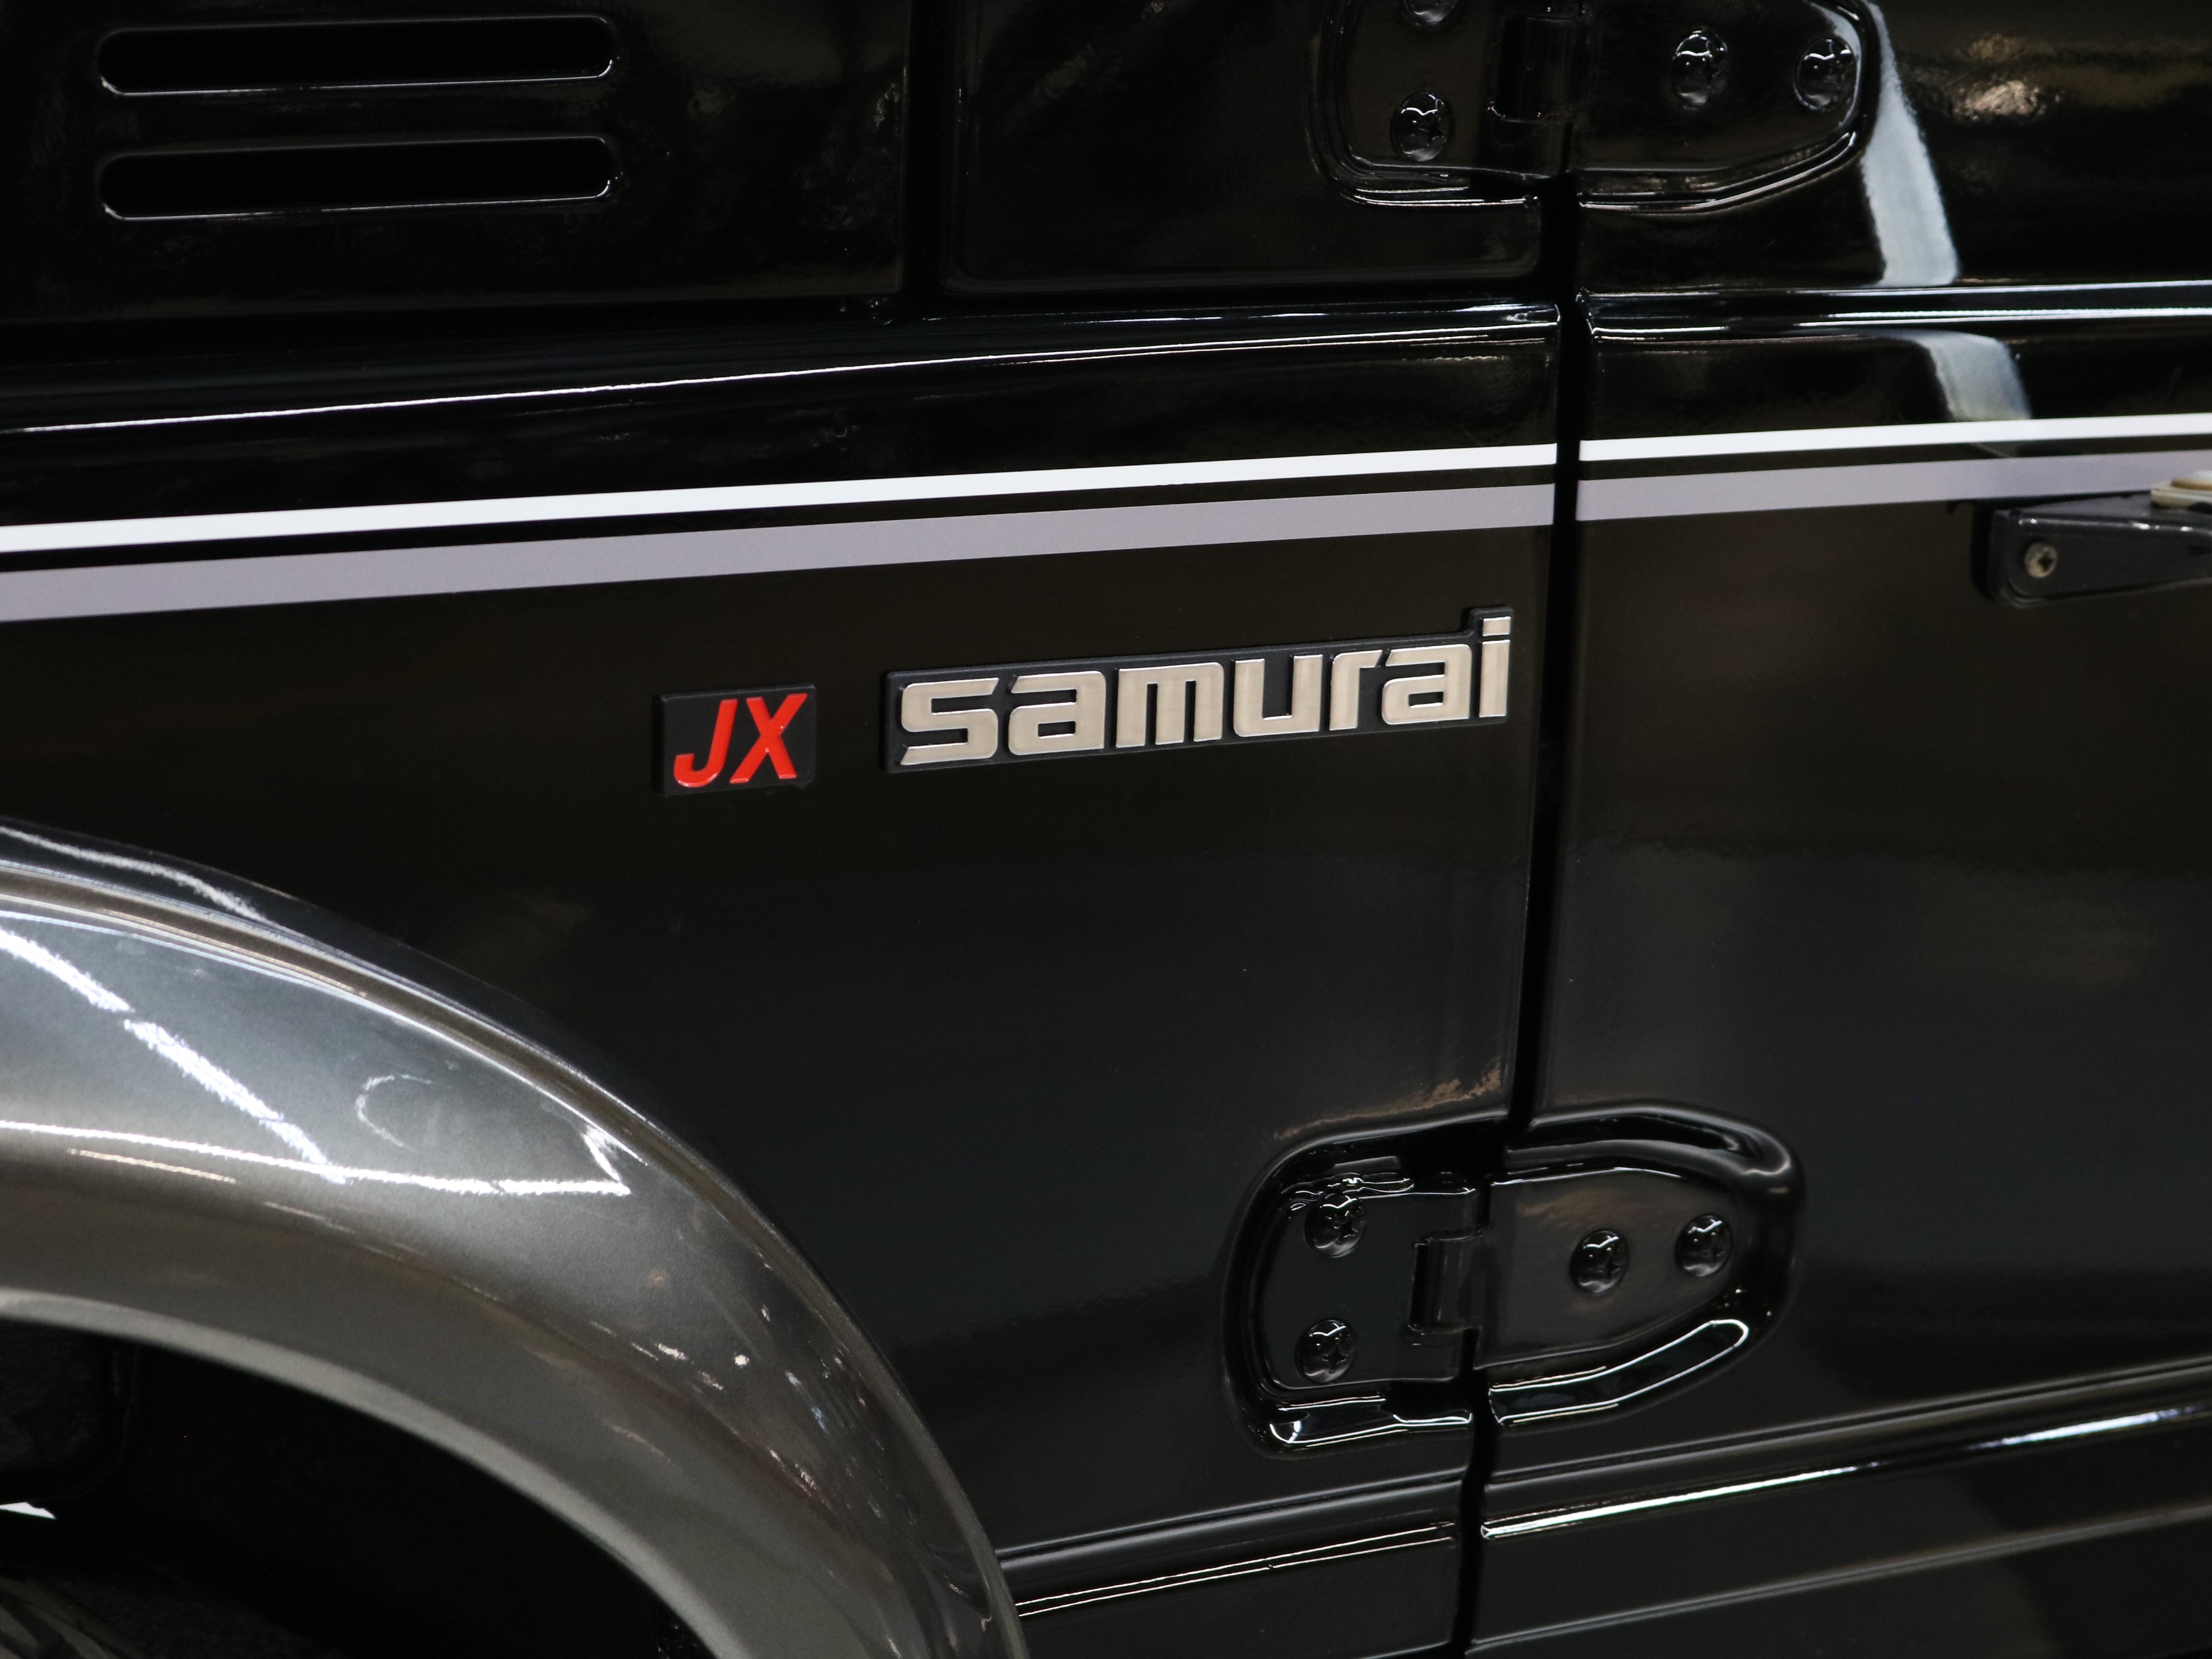 1986 Suzuki Samurai 40